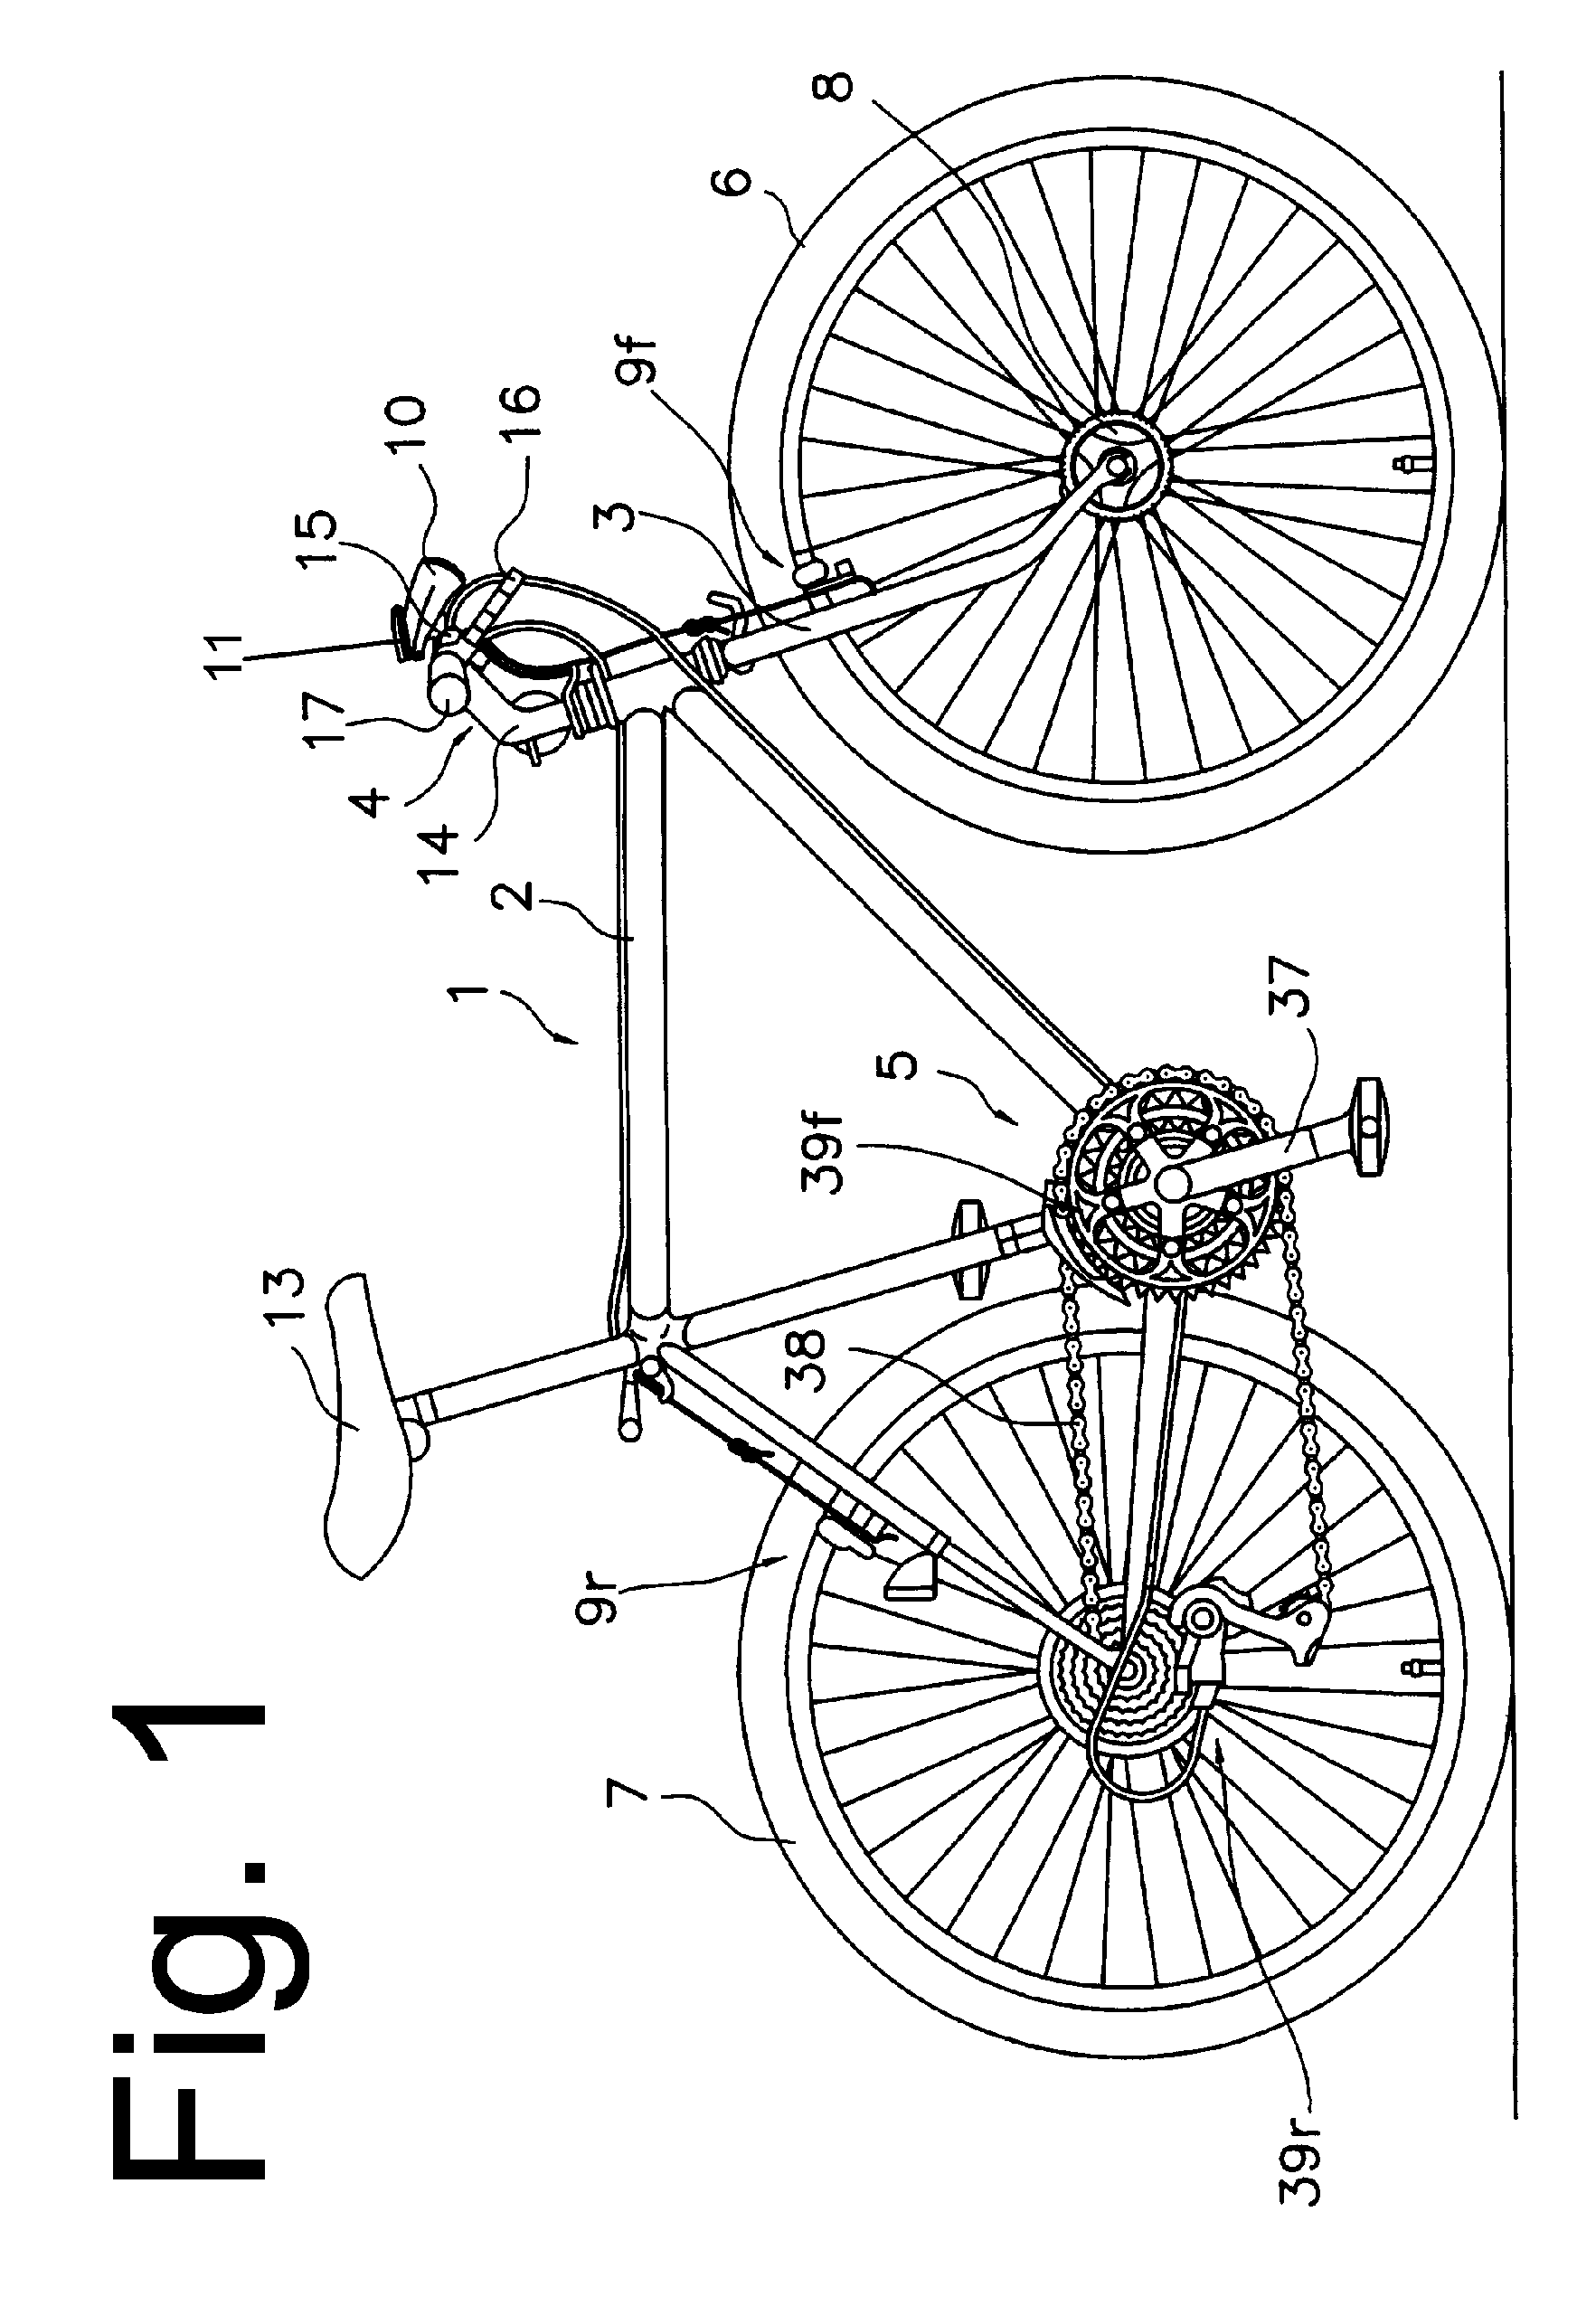 Bicycle lighting apparatus with mountable display